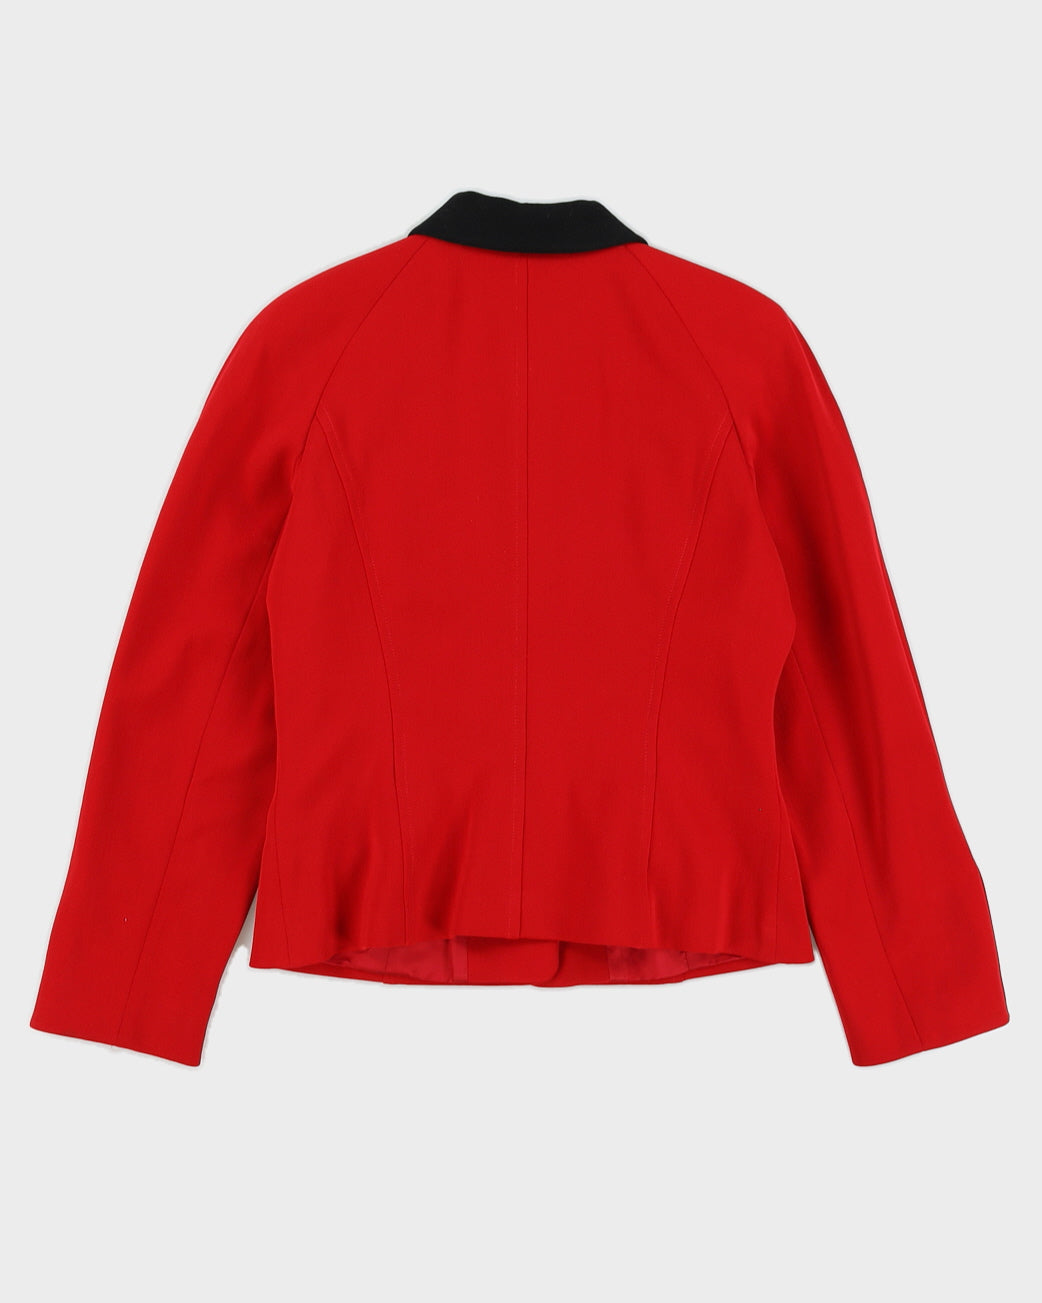 Louis Feraud Red Blazer Jacket - S